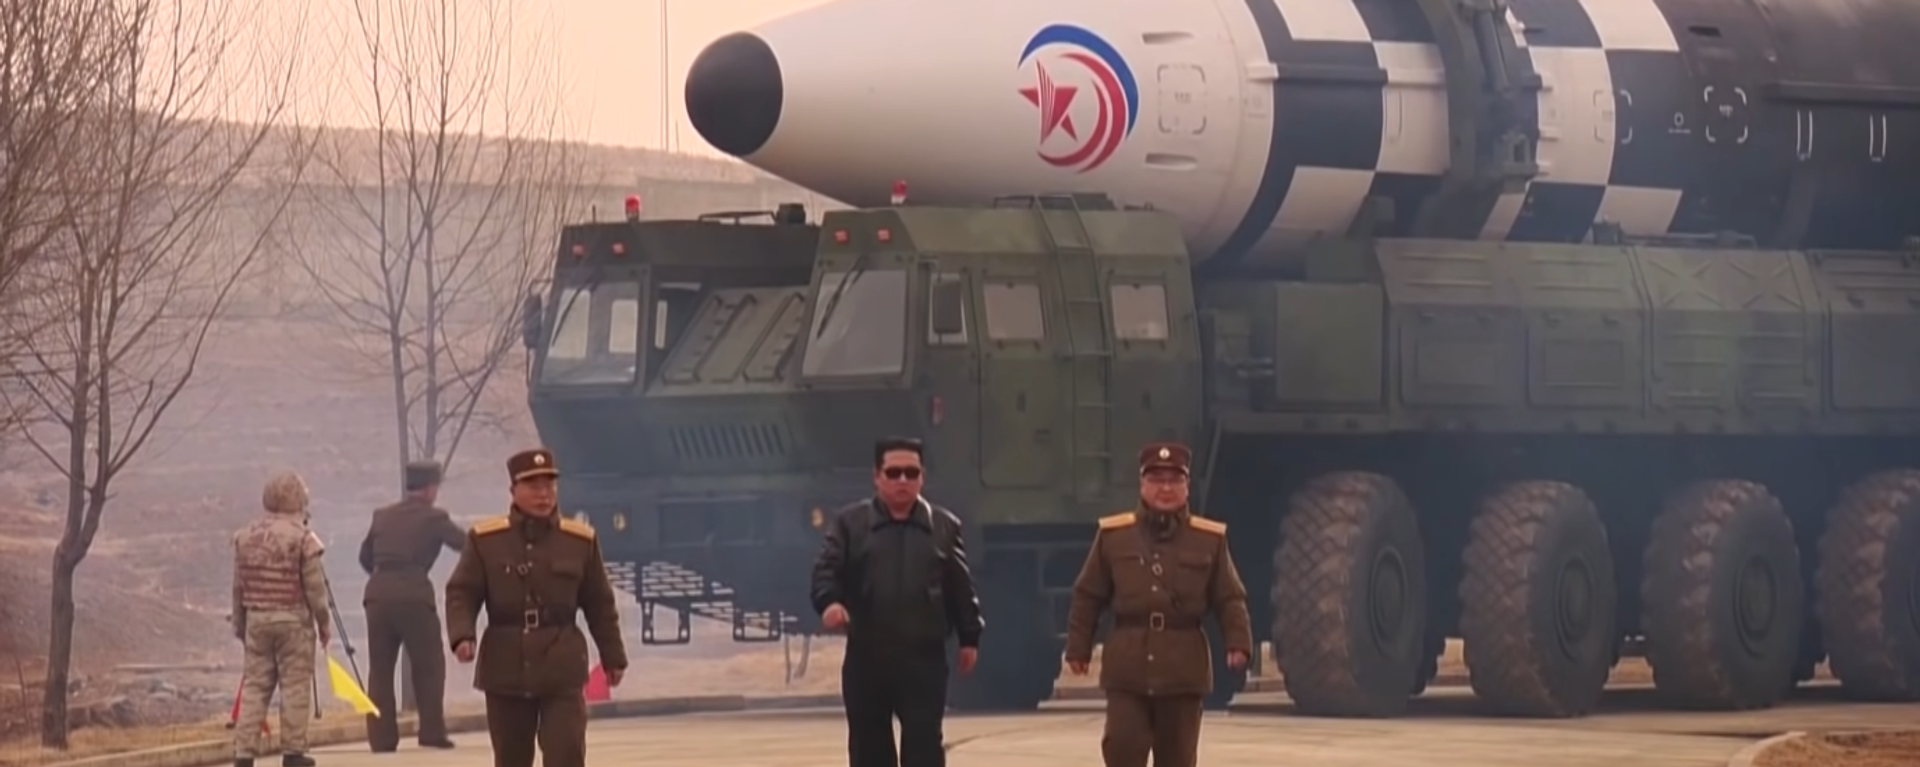 North Korean leader Kim Jong-un takes part in launch of heavy intercontinental ballistic missile test. - Sputnik International, 1920, 02.11.2022